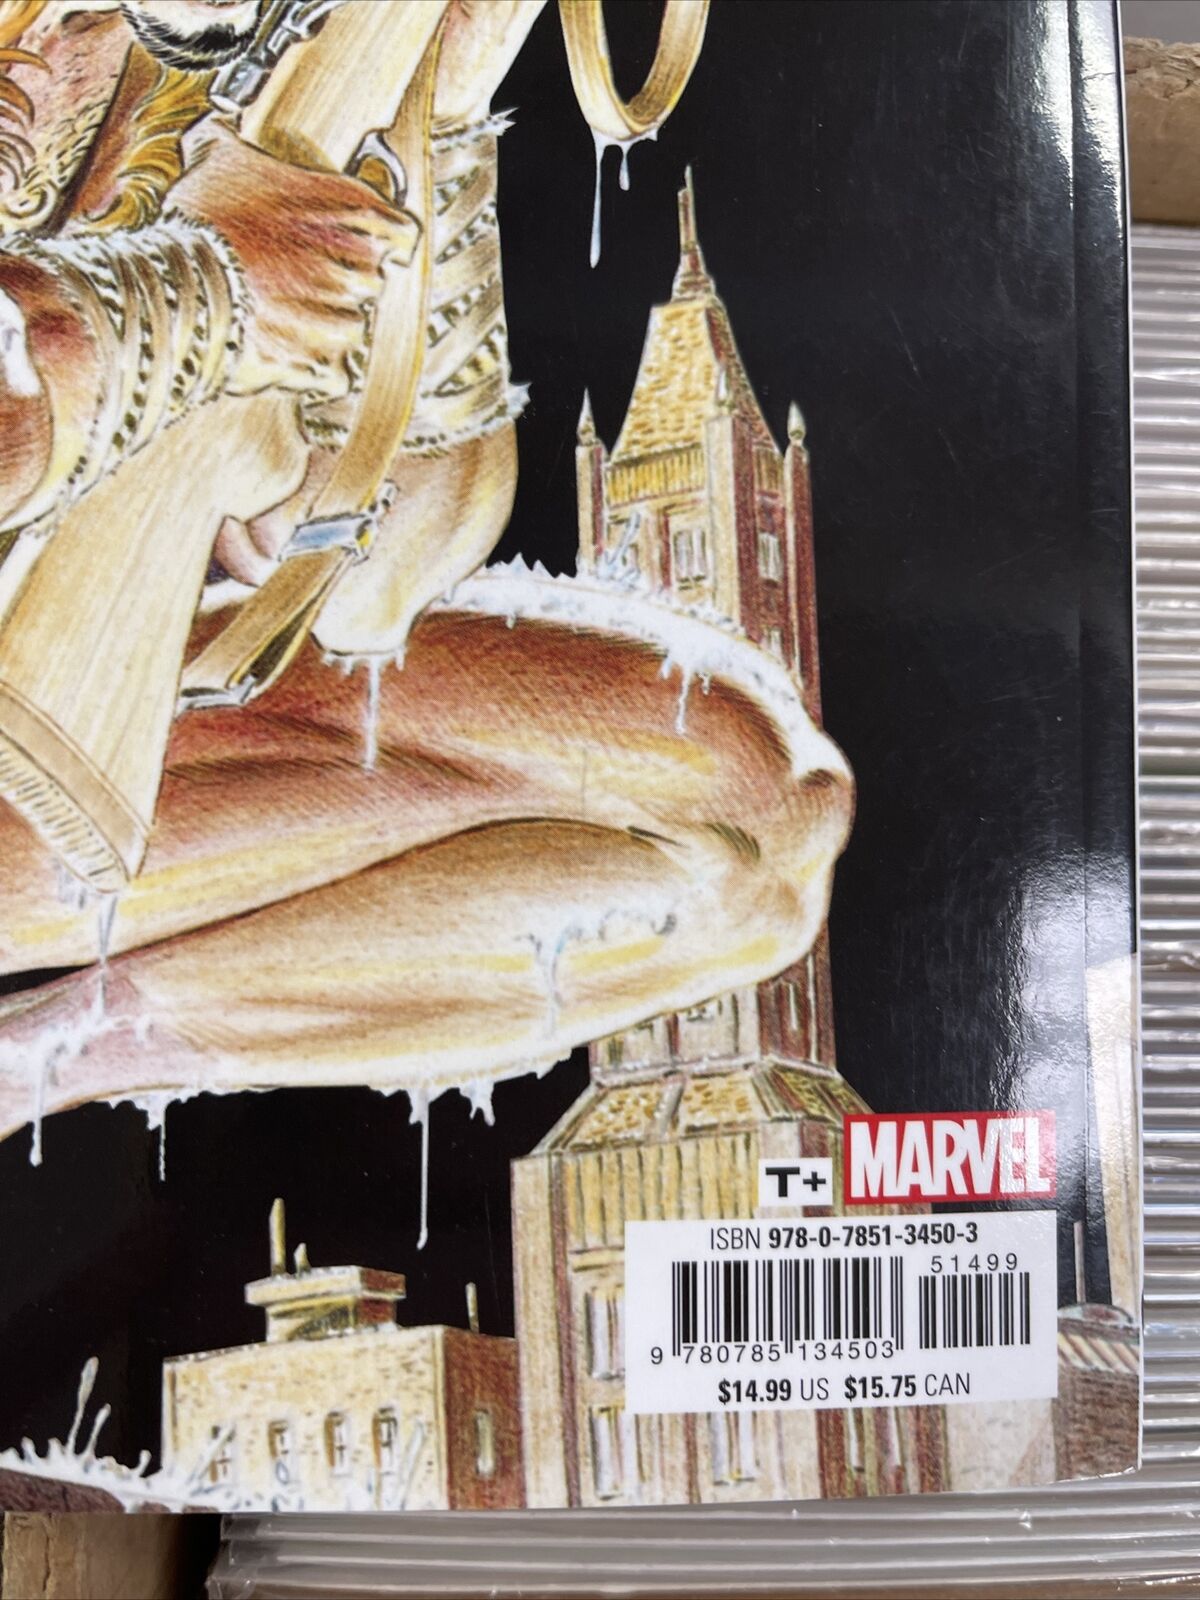 Amazing Spider-Man Kraven’s Last Hunt Trade Paperback TPB